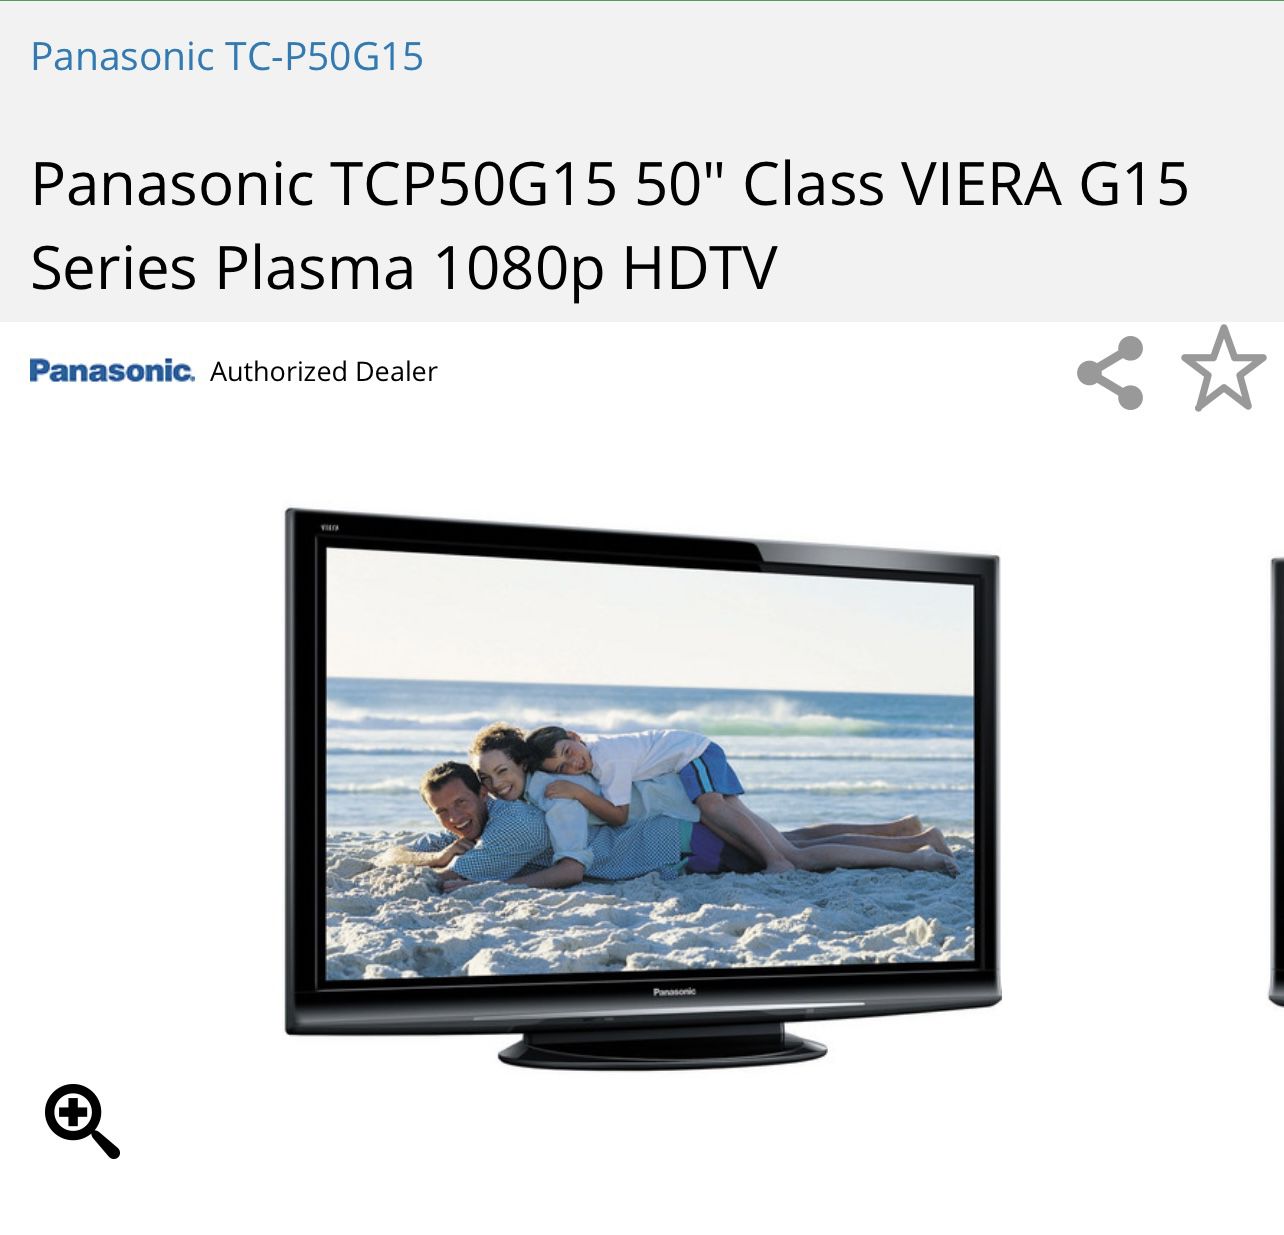 Panasonic TCP50G15 50" FLAT SCREEN TV VIERA G15 Series Plasma 1080p HDTV 1080 